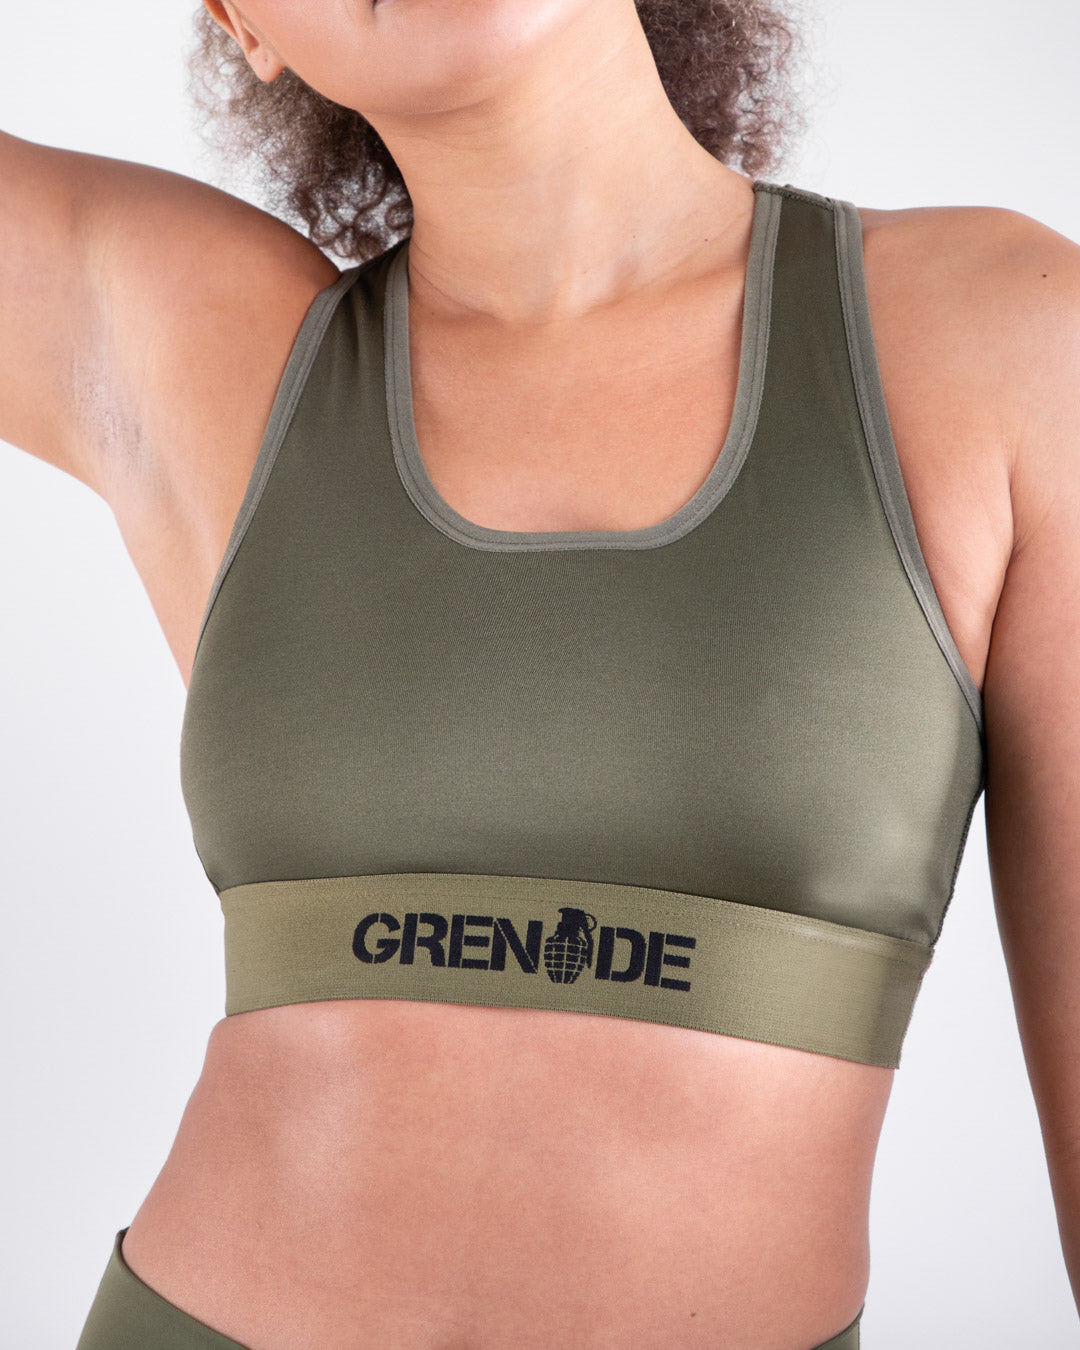 Grenade Womens Sports Bra - Recruit Army Green